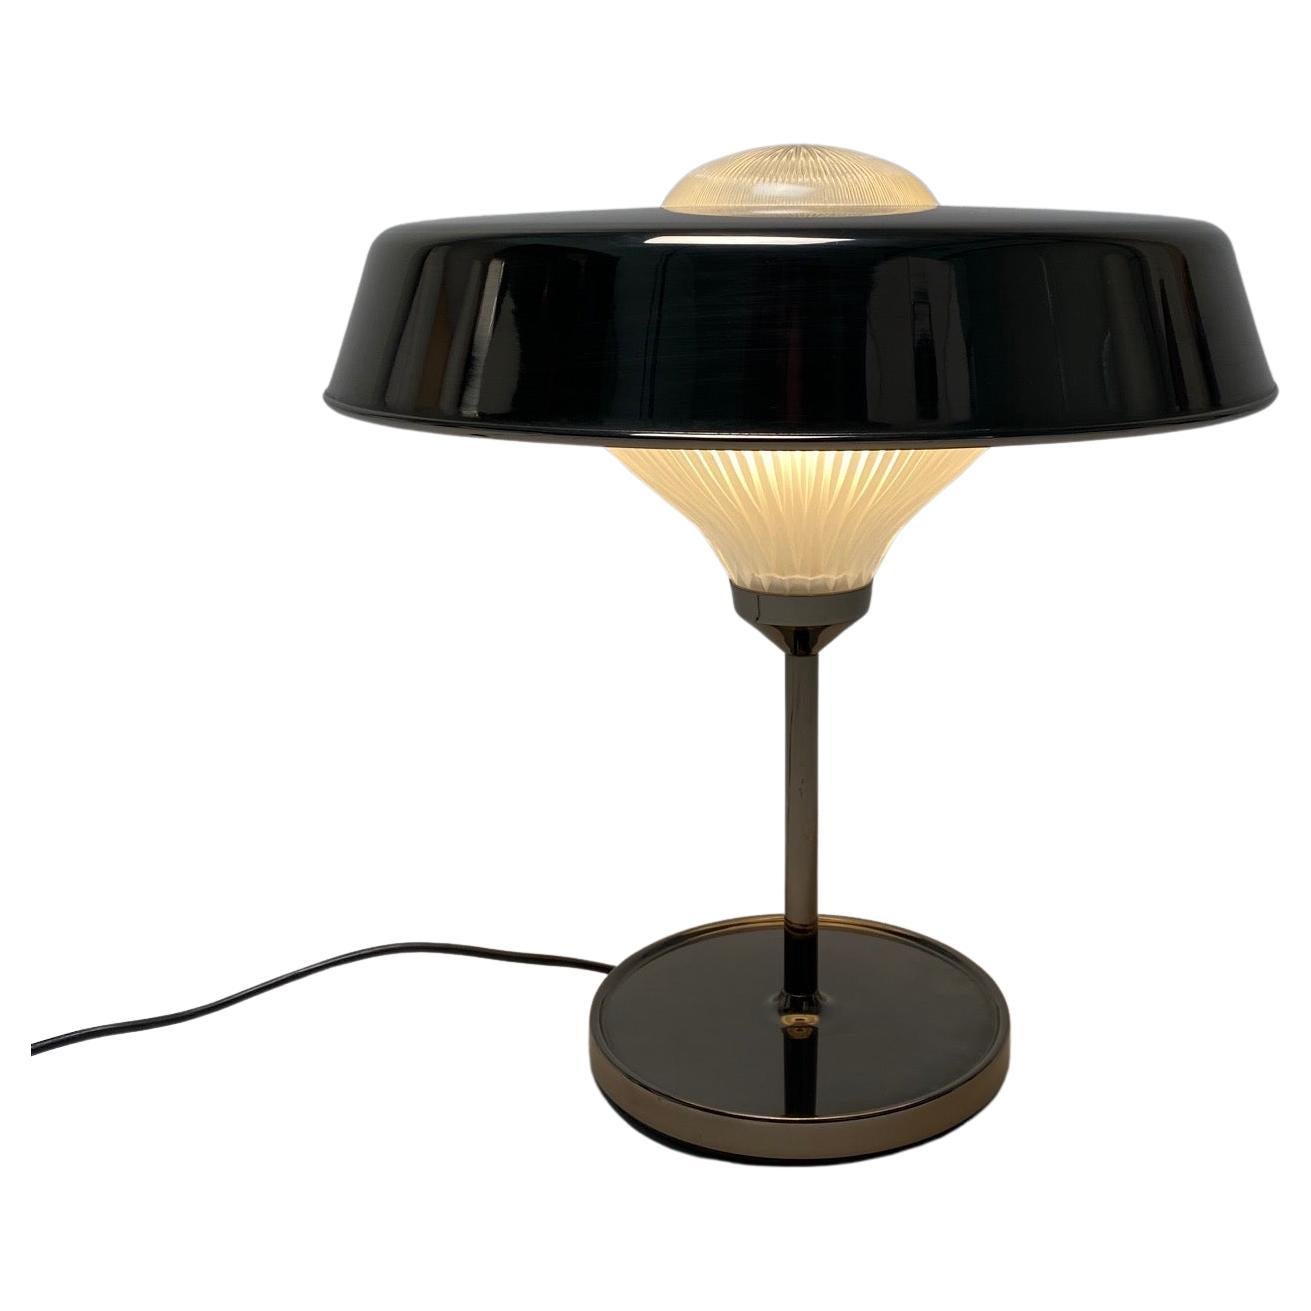 Studio BBPR "Ro" Table Lamp, Artemide, Italy, 1960s